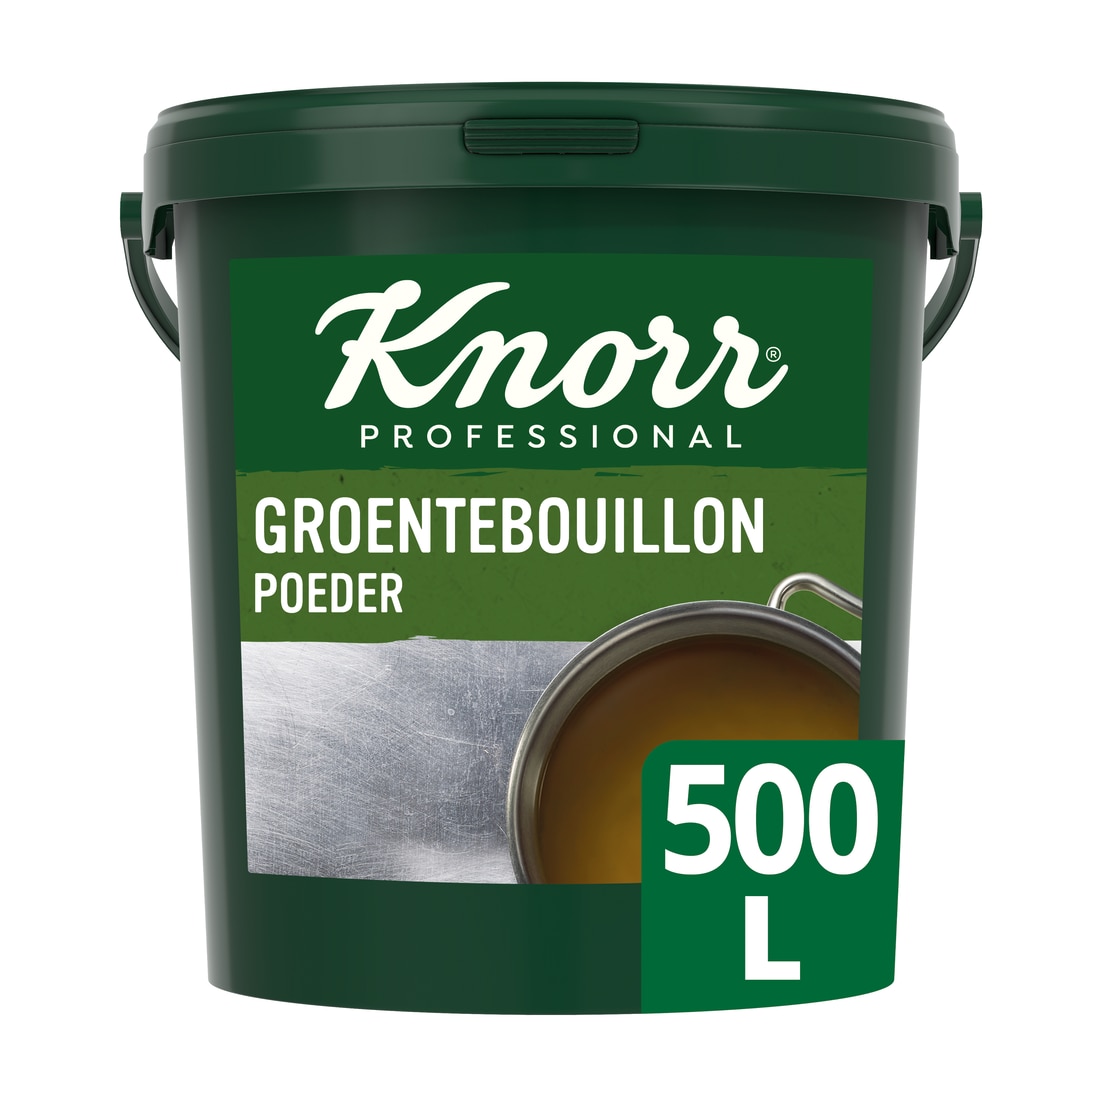 Knorr Professional Groentebouillon authentiek poeder opbrengst 500L - 